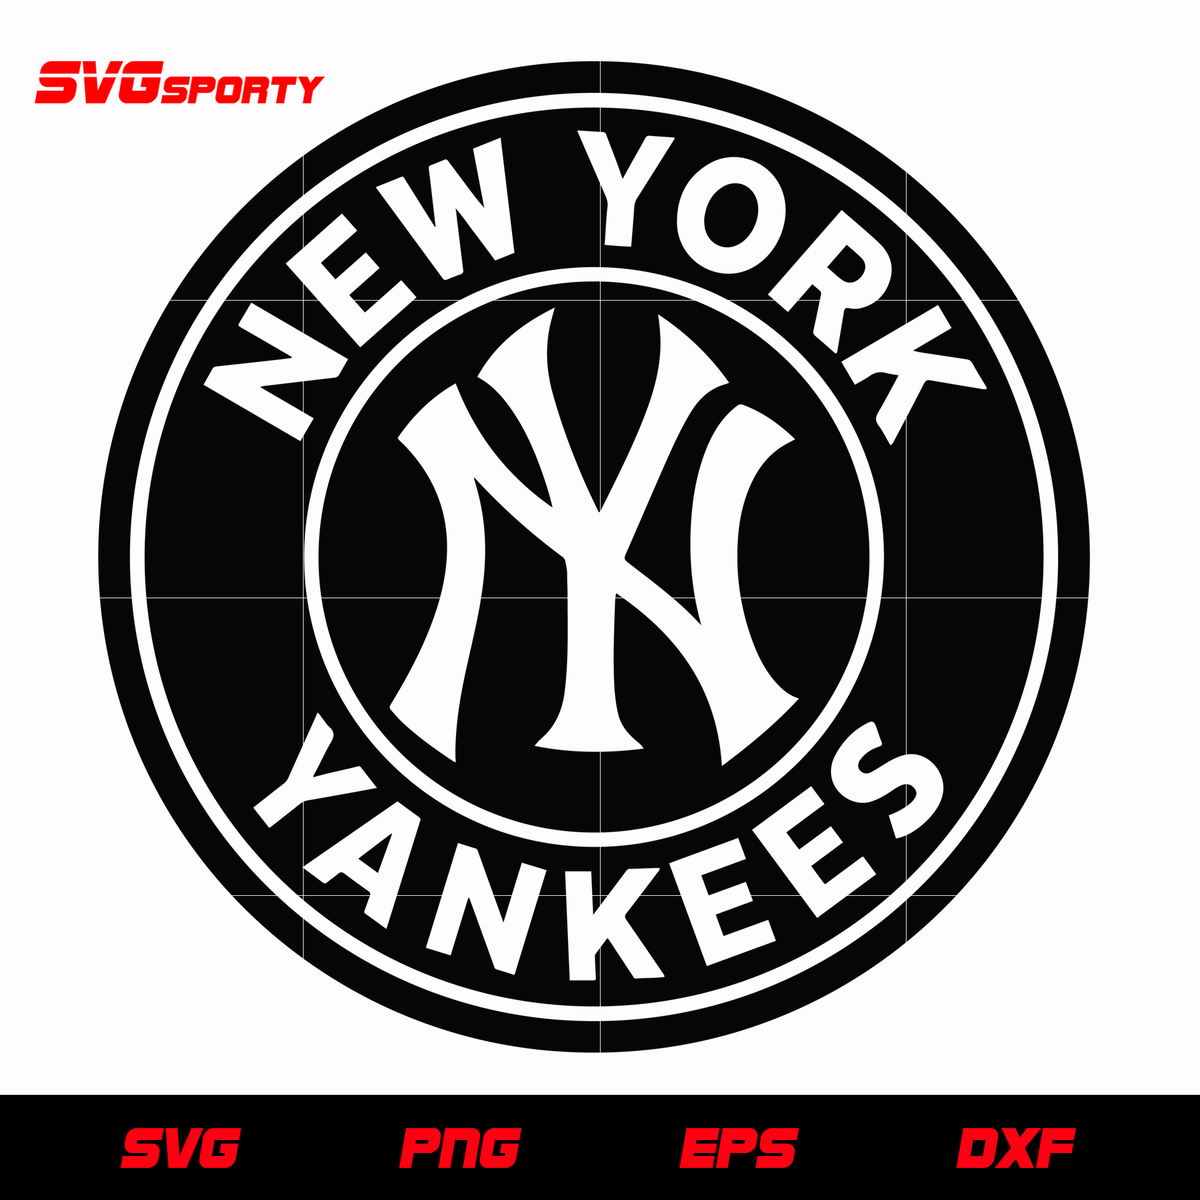 new york black yankees logo